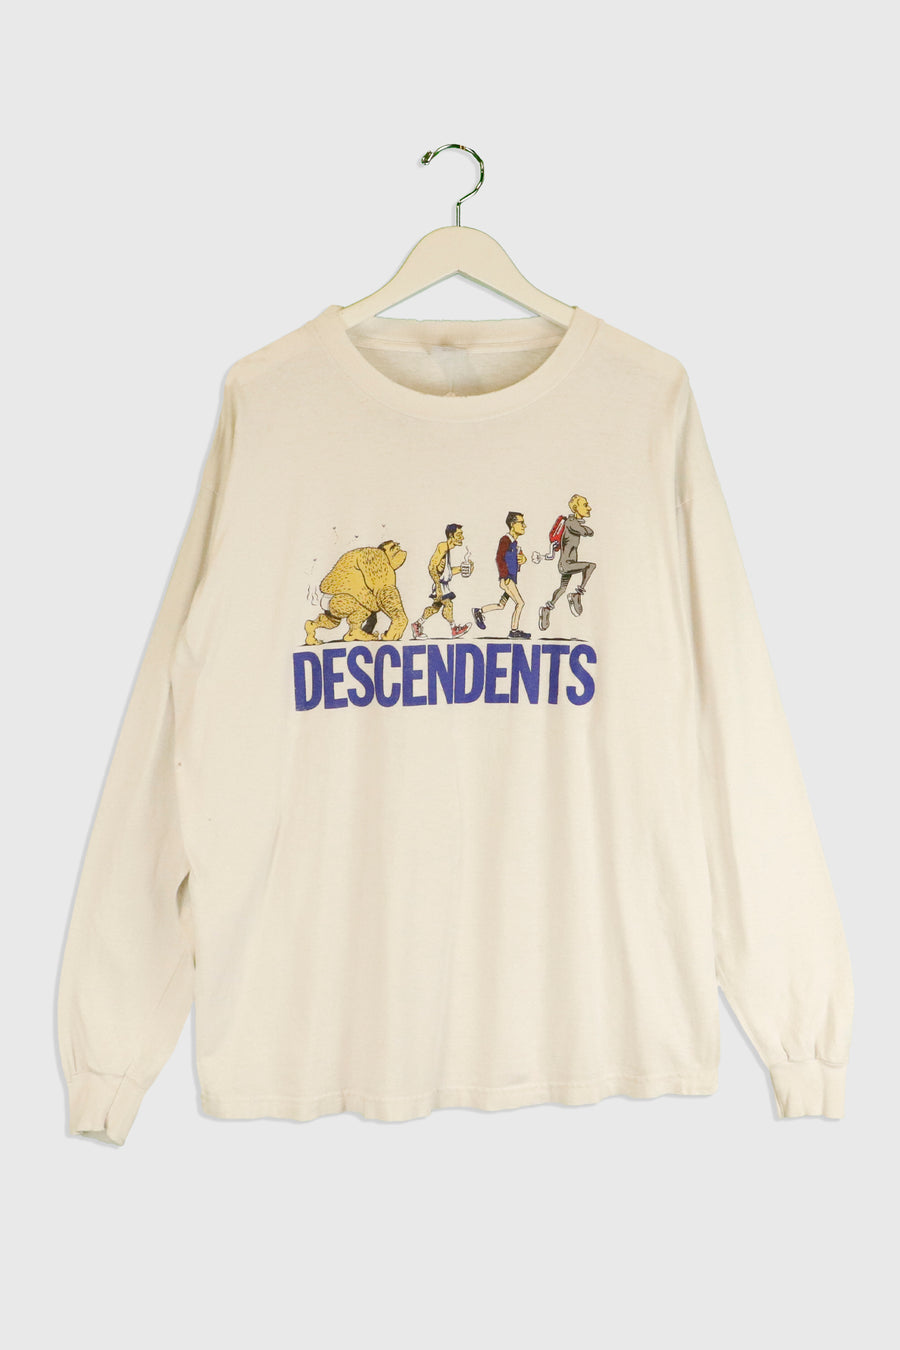 Vintage 1997 Descendents Everything Sucks Tour T Shirt Sz XL